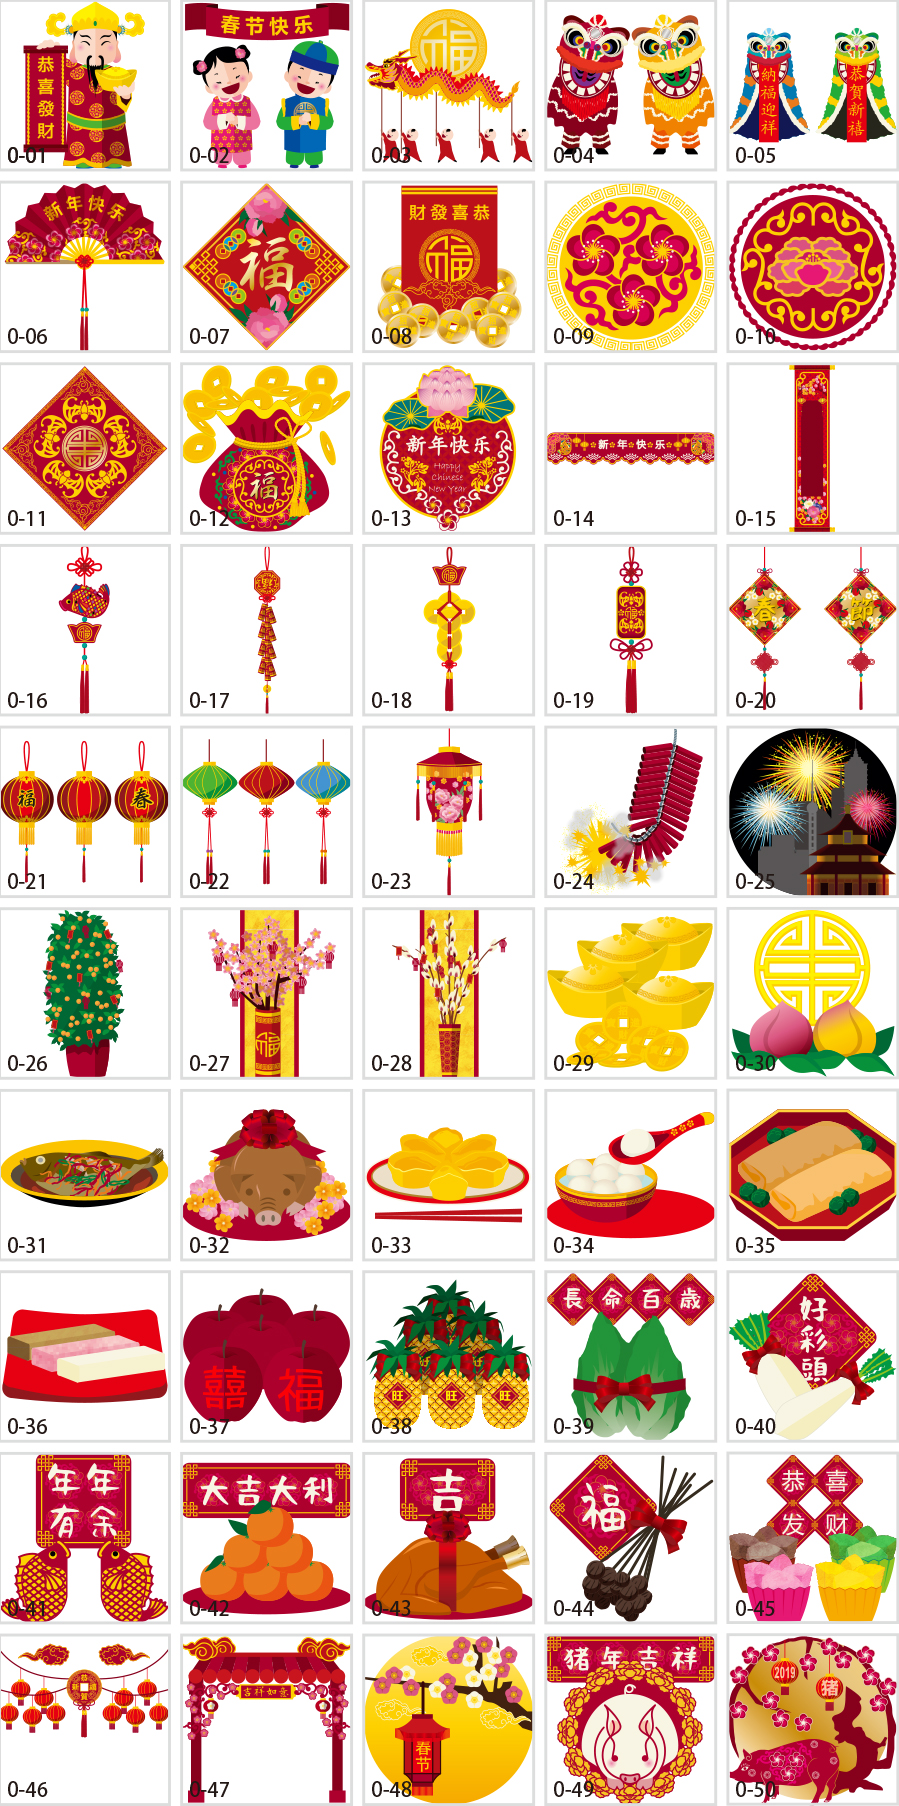 Illustration material for the Spring Festival